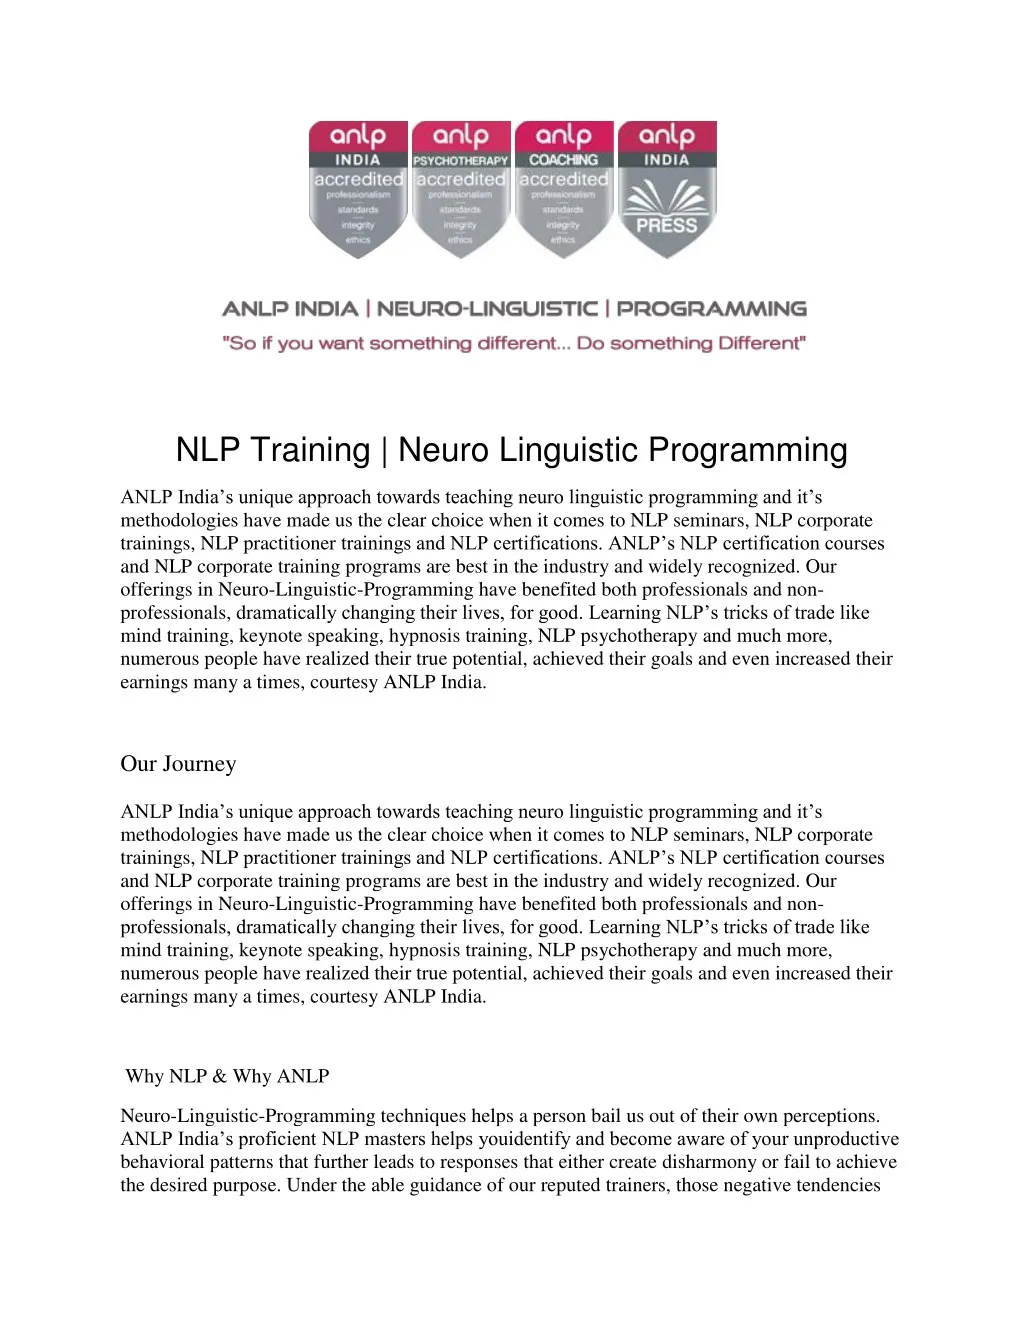 nlp training neuro linguistic programming